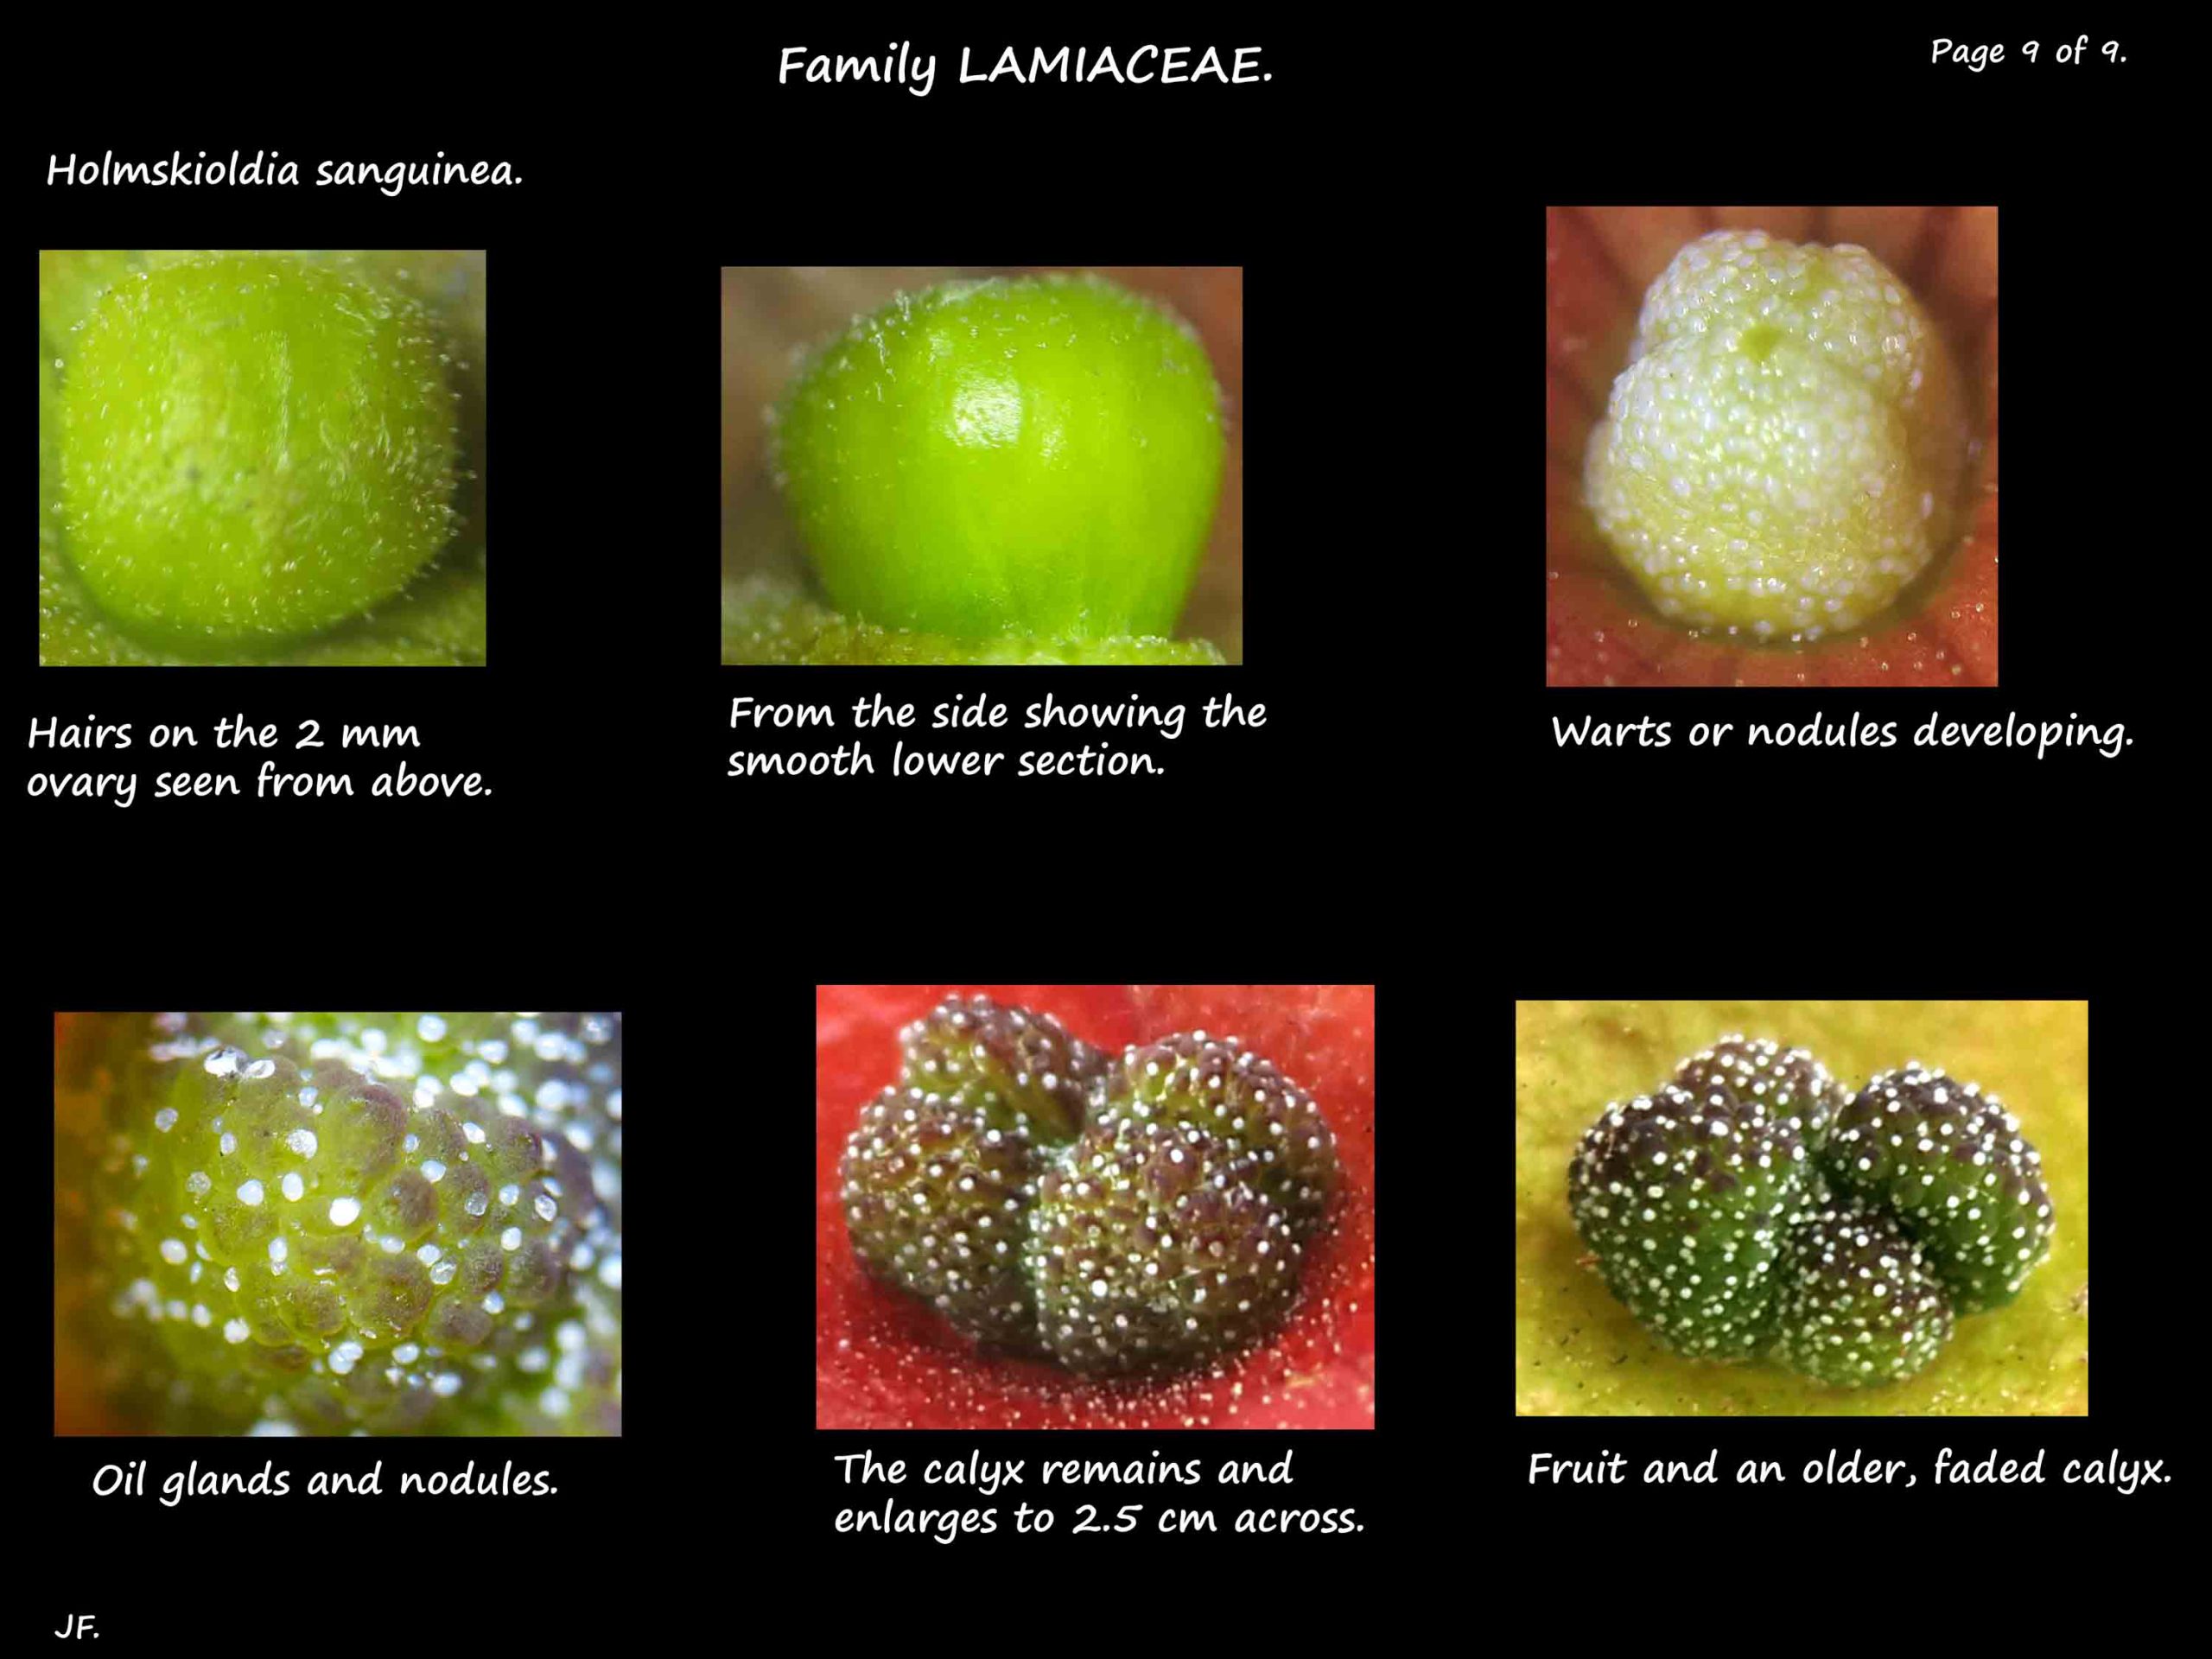 9 Holmskioldia sanguinea fruit